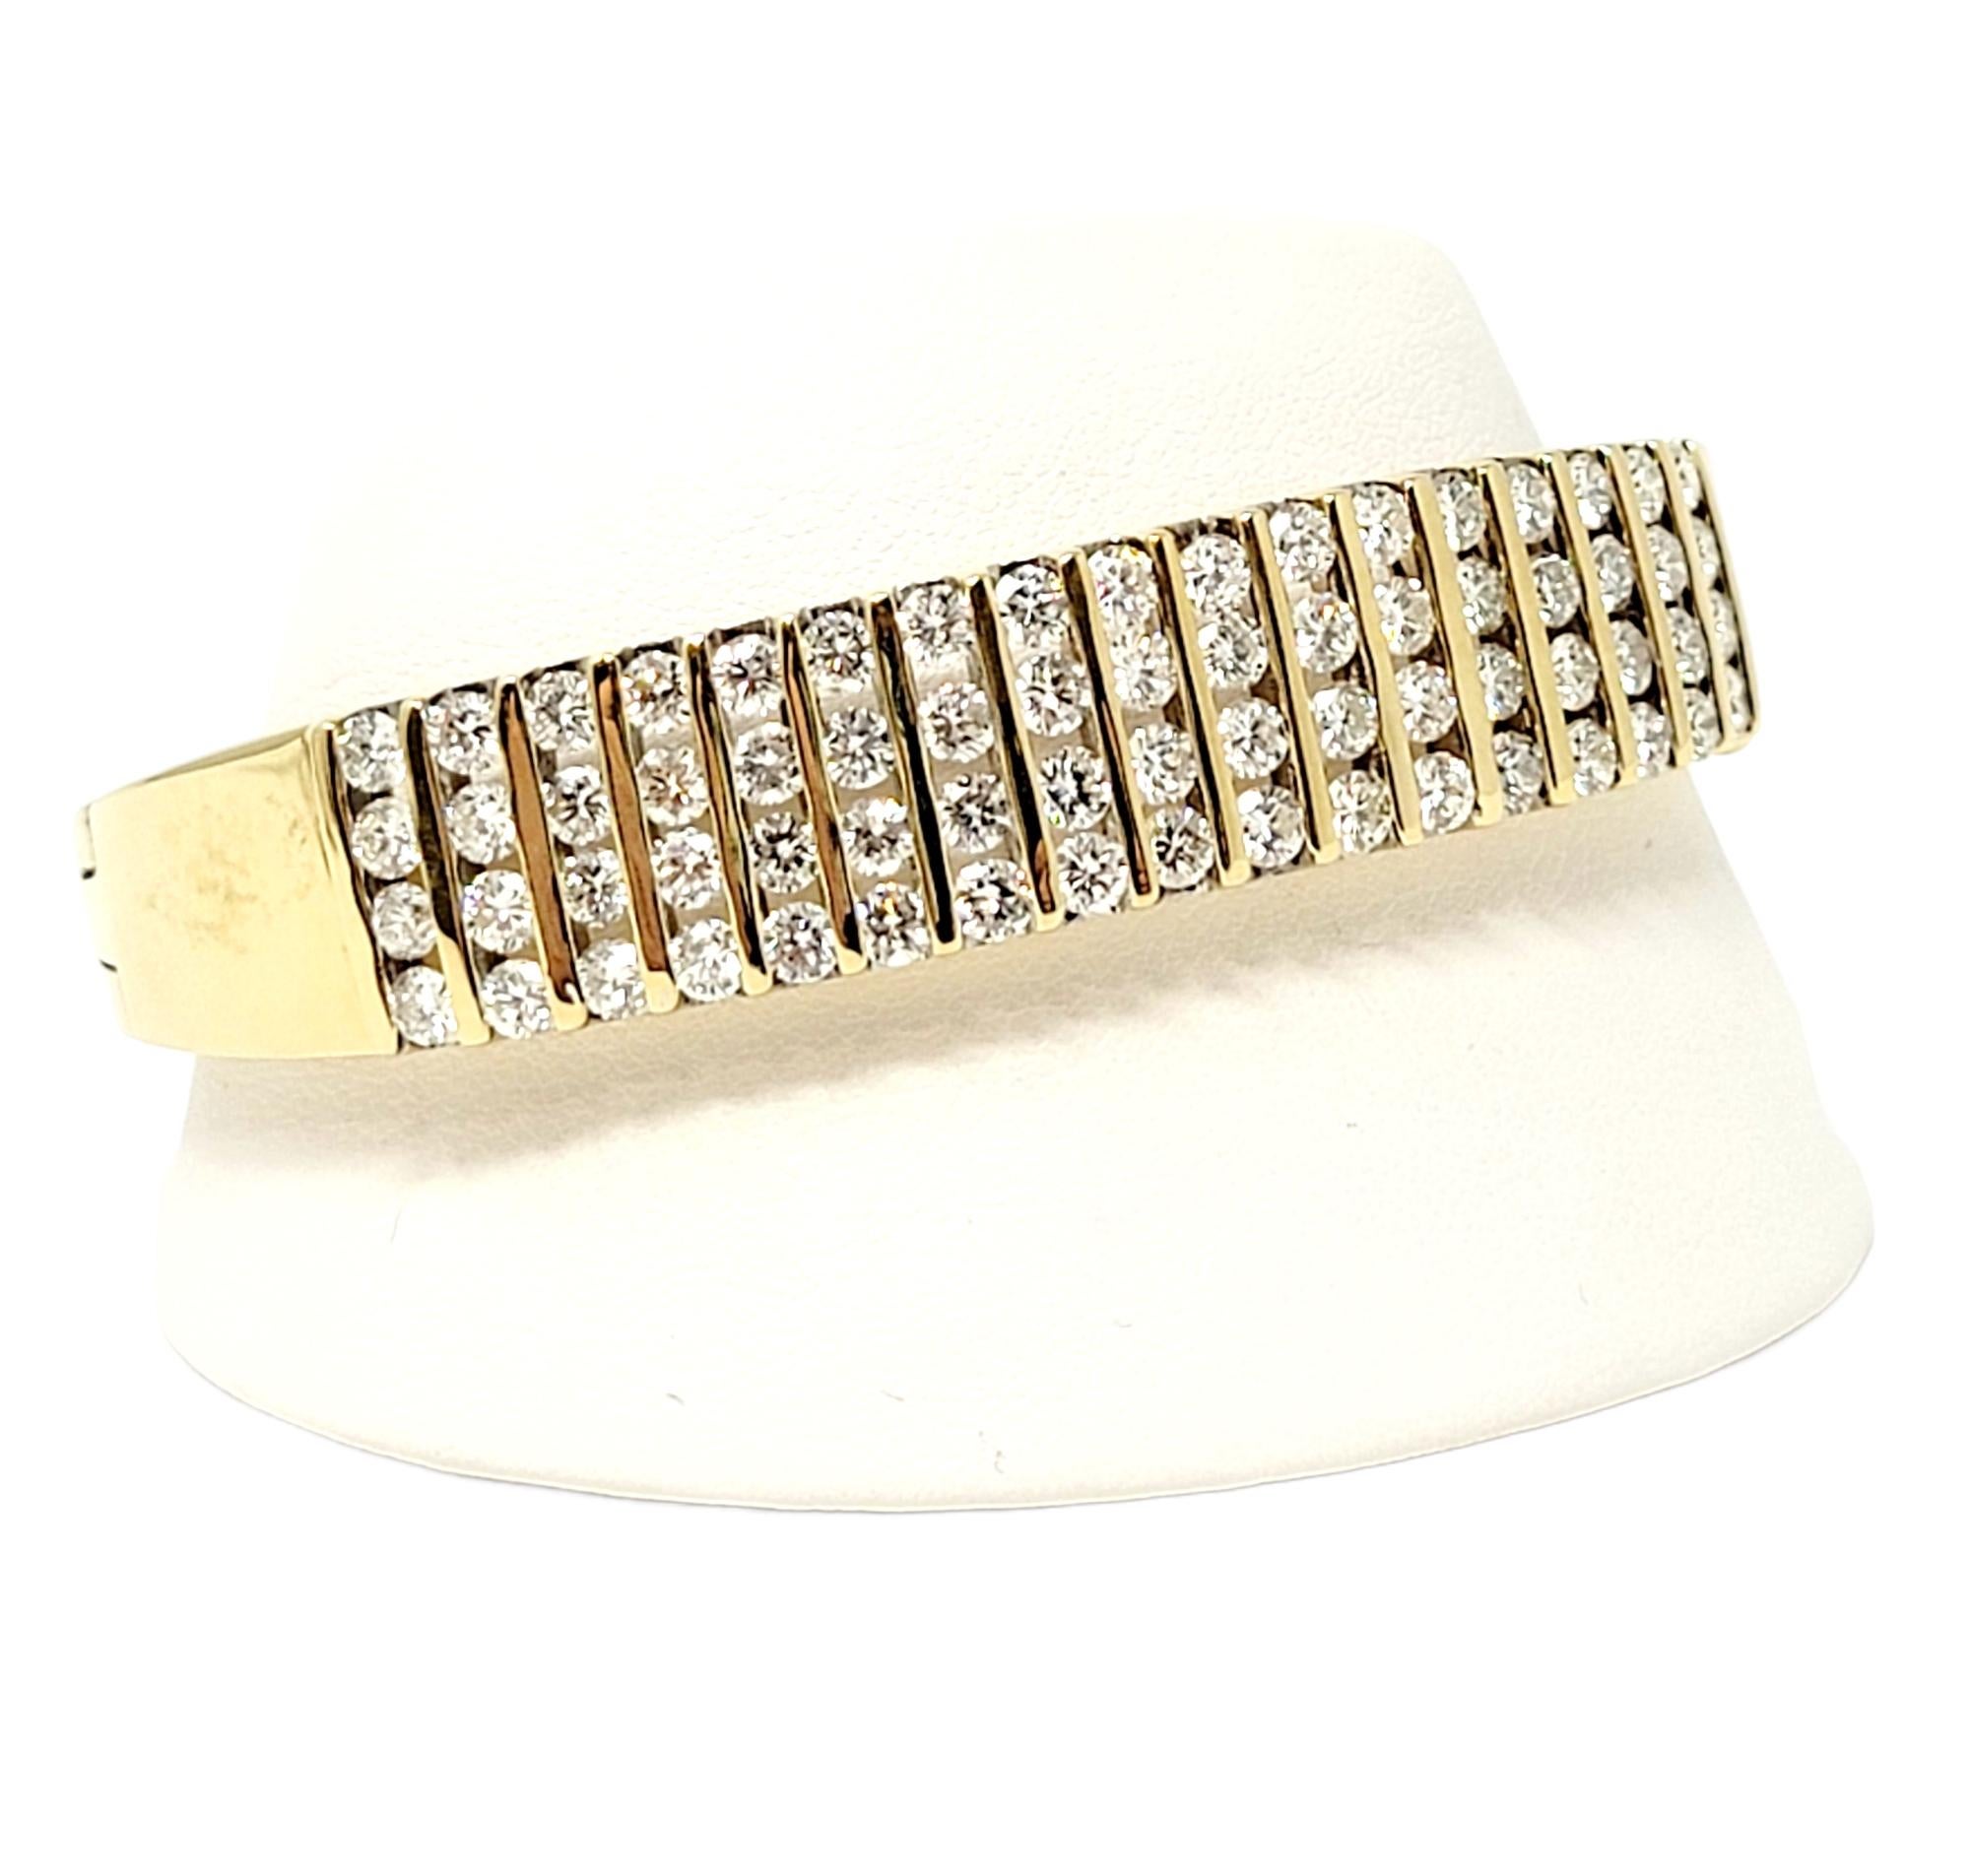 Channel Set Round Diamond Bangle Bracelet 5.50 Carats Total 14 Karat Yellow Gold For Sale 4